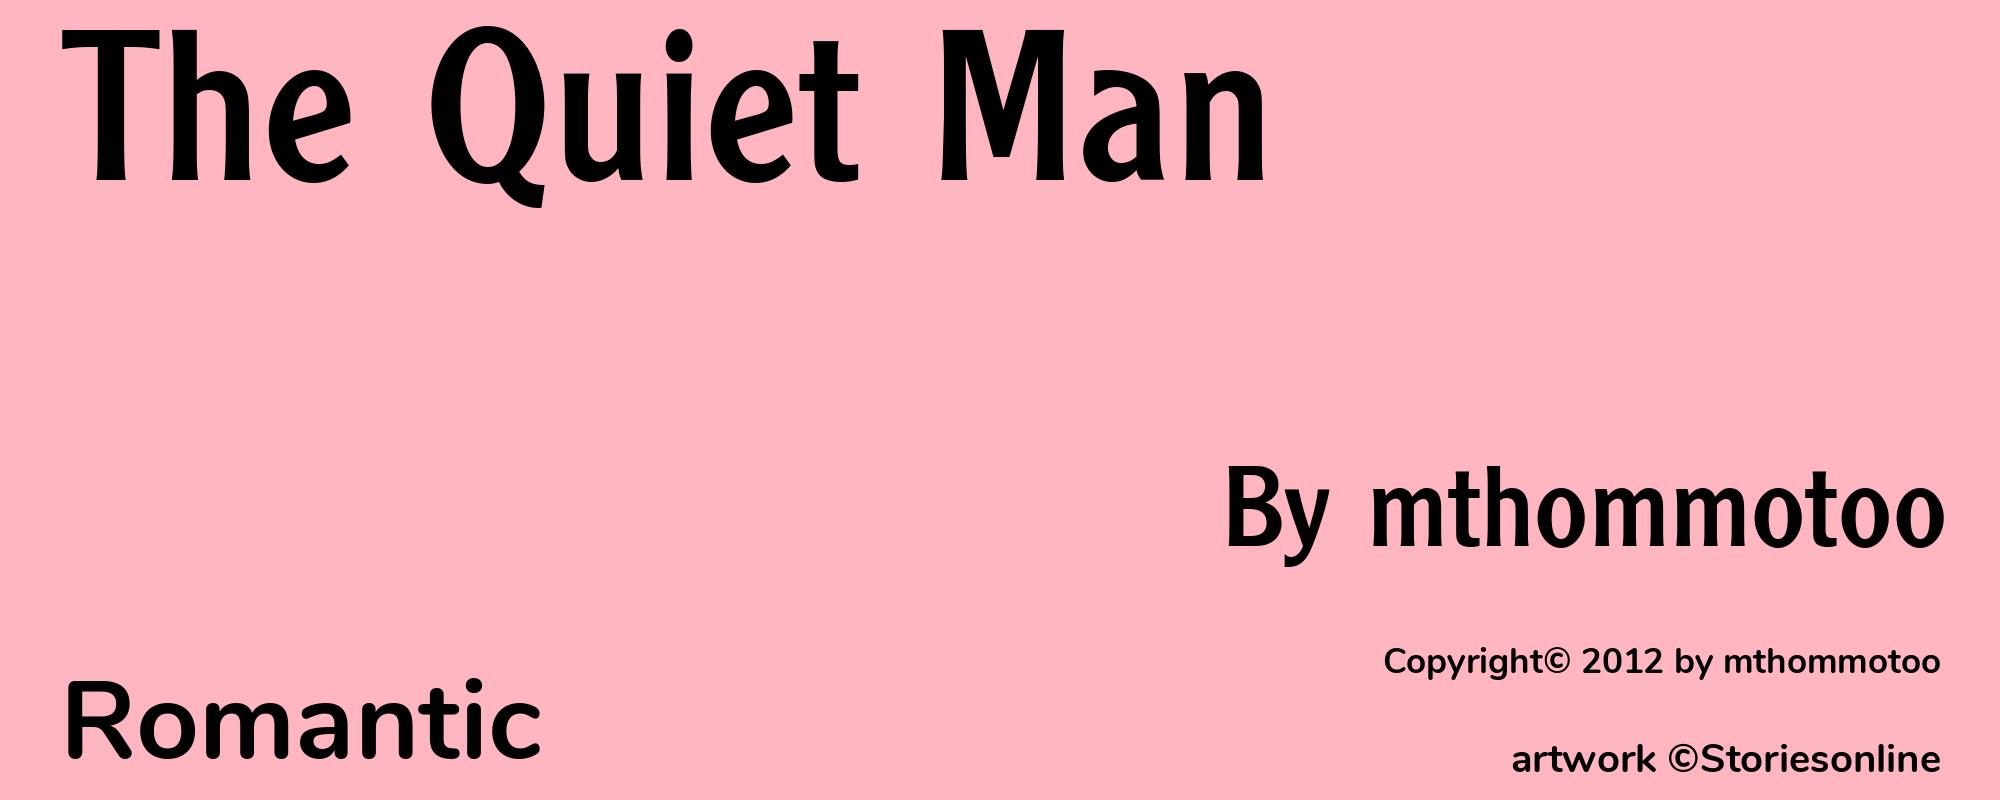 The Quiet Man - Cover